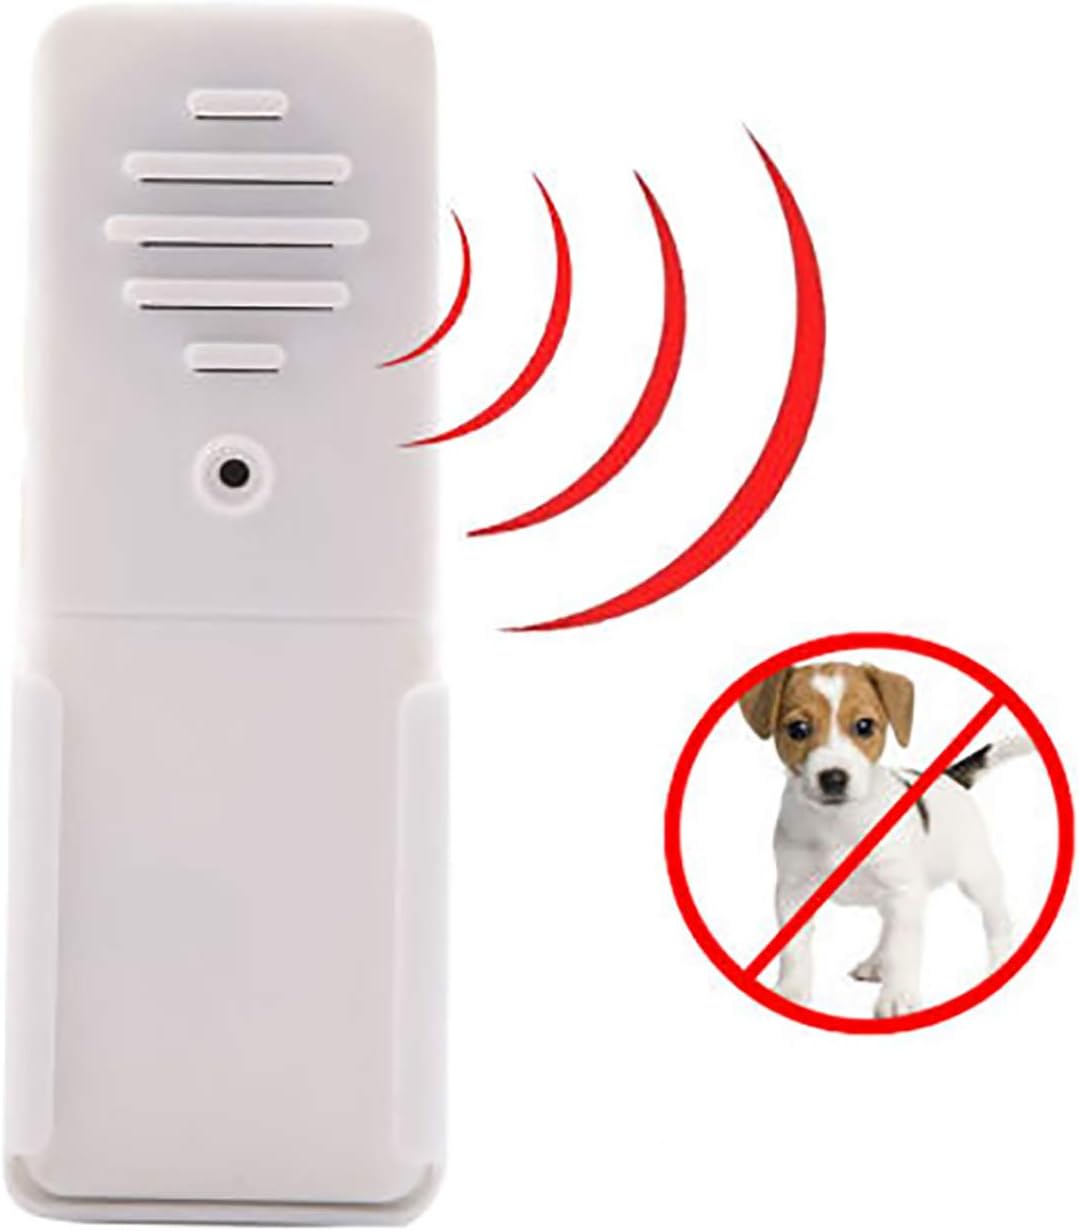 Kole Imports Ultrasonic Bark Stopper: Stop Dog Barking Instantly with Wireless Technology - Smart Tech Shopping